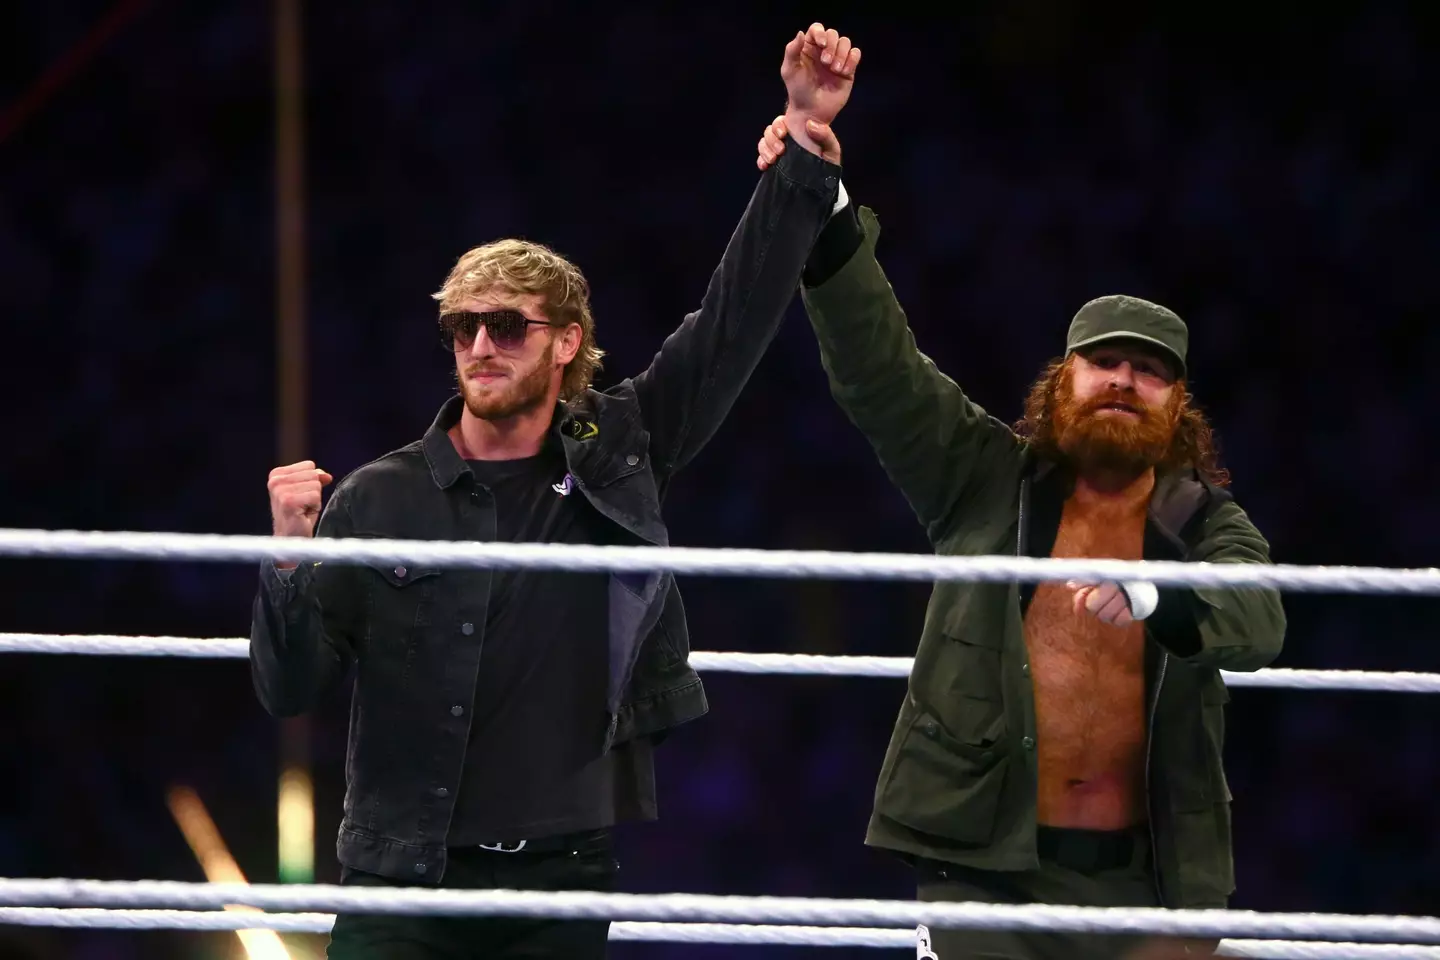 Logan was victorious at WrestleMania 38.